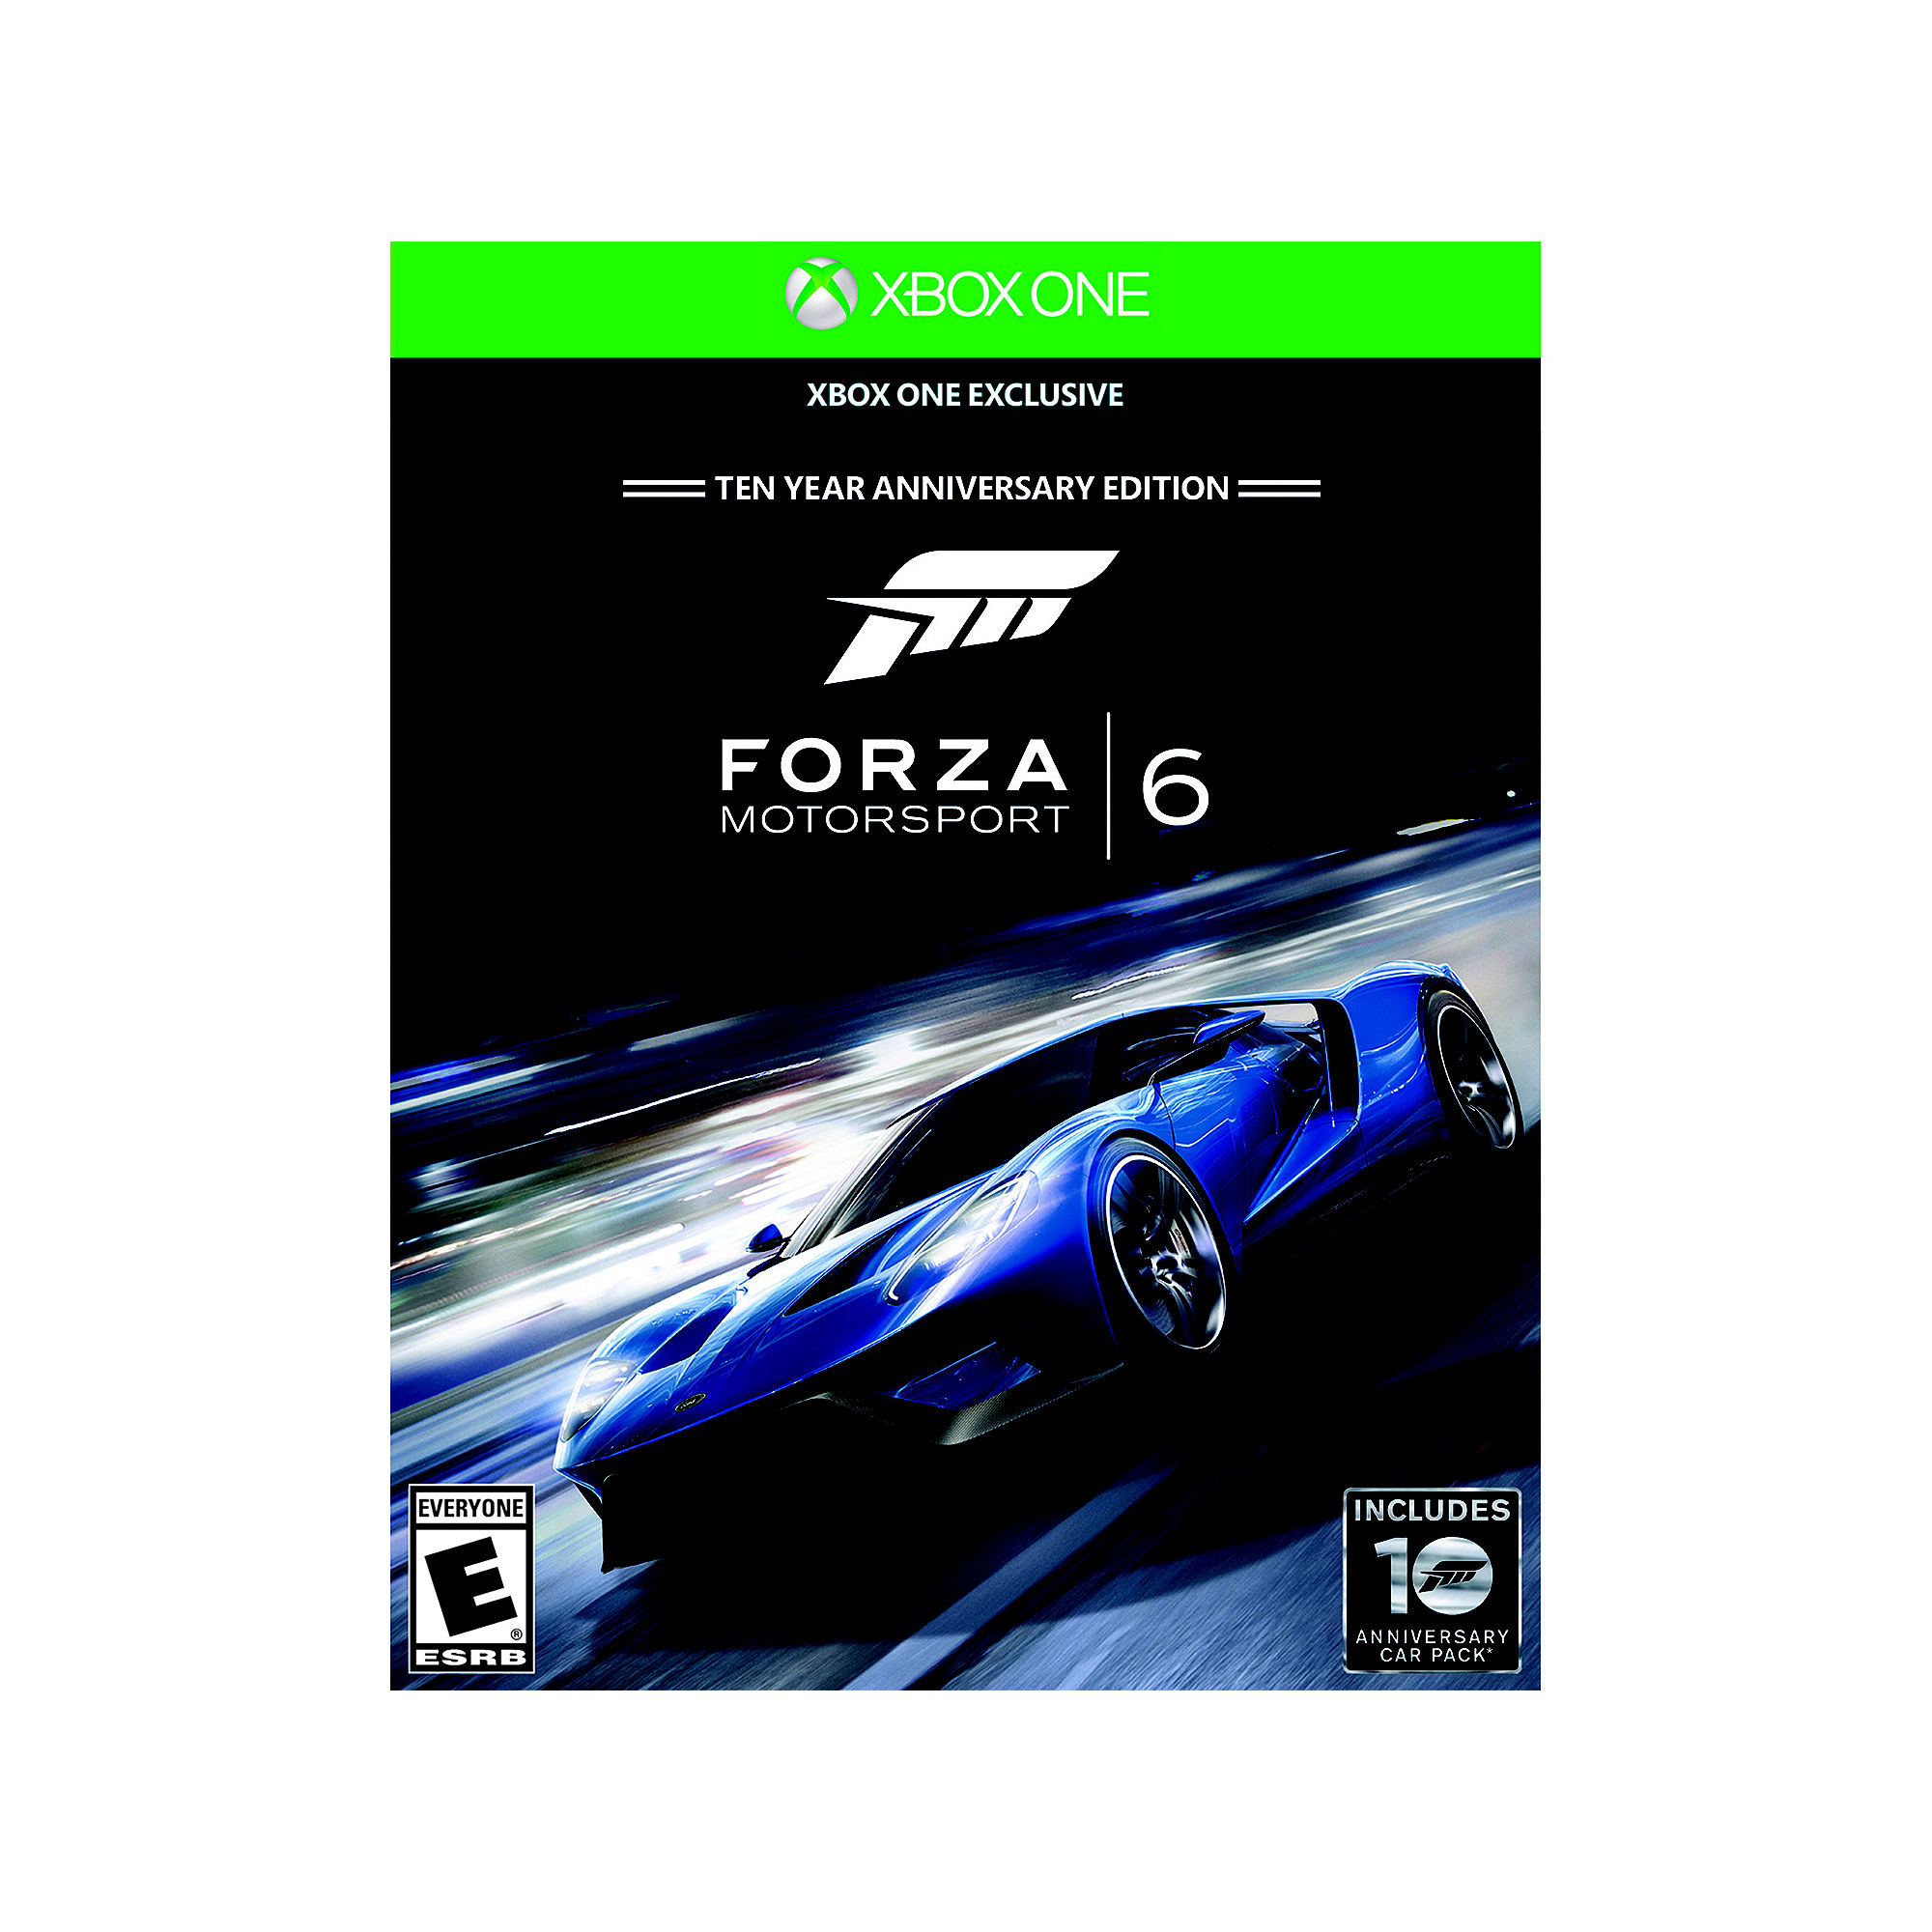 Forza Motorsport 6, Microsoft, Xbox One, 885370901450 - image 4 of 11